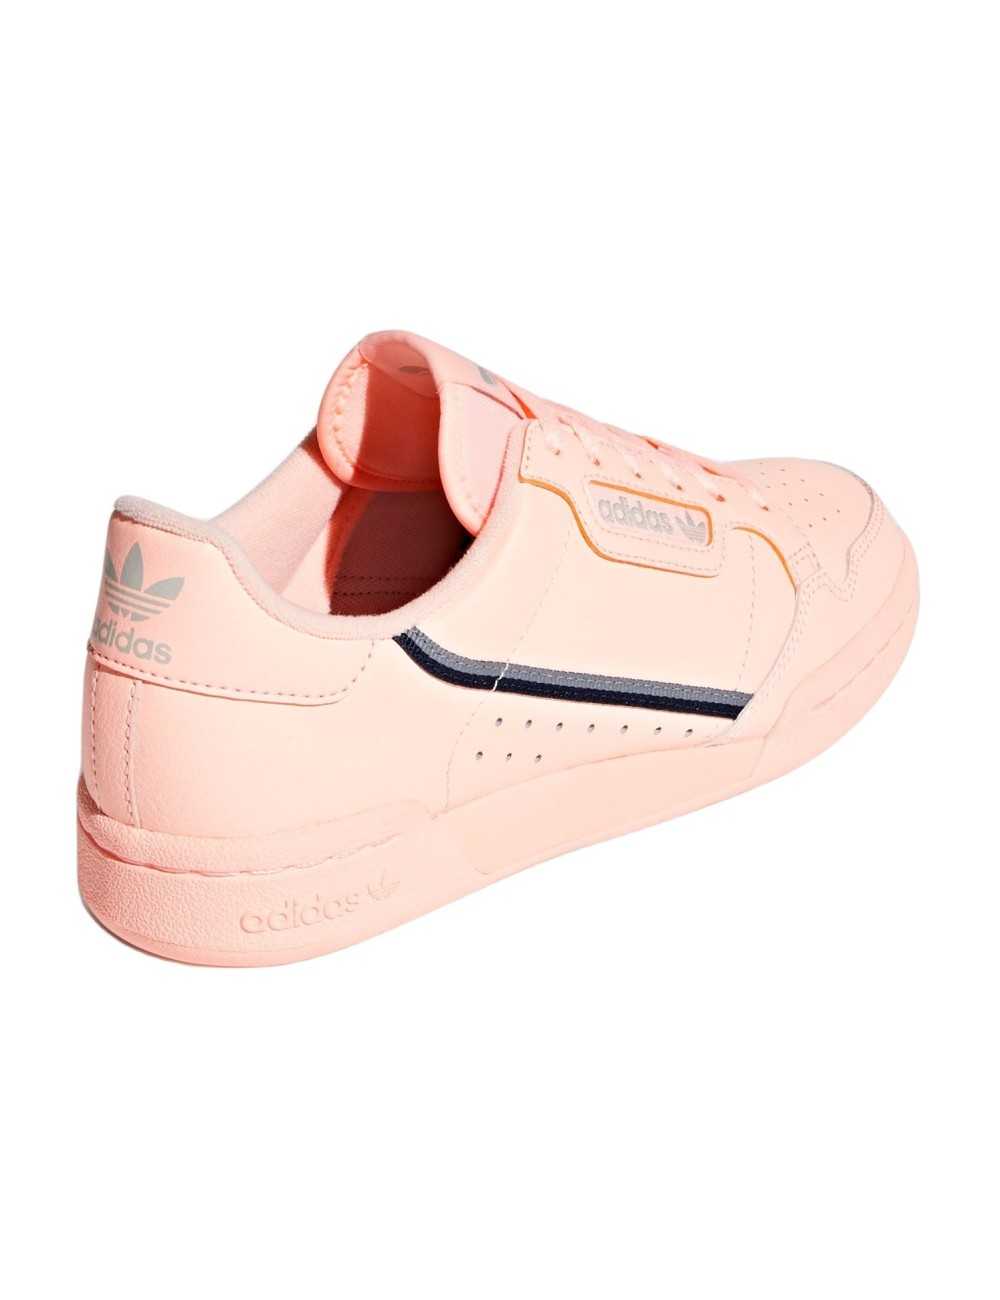 Scarpe continental 80 J pink in pelle - Scarpe Donna Sportive